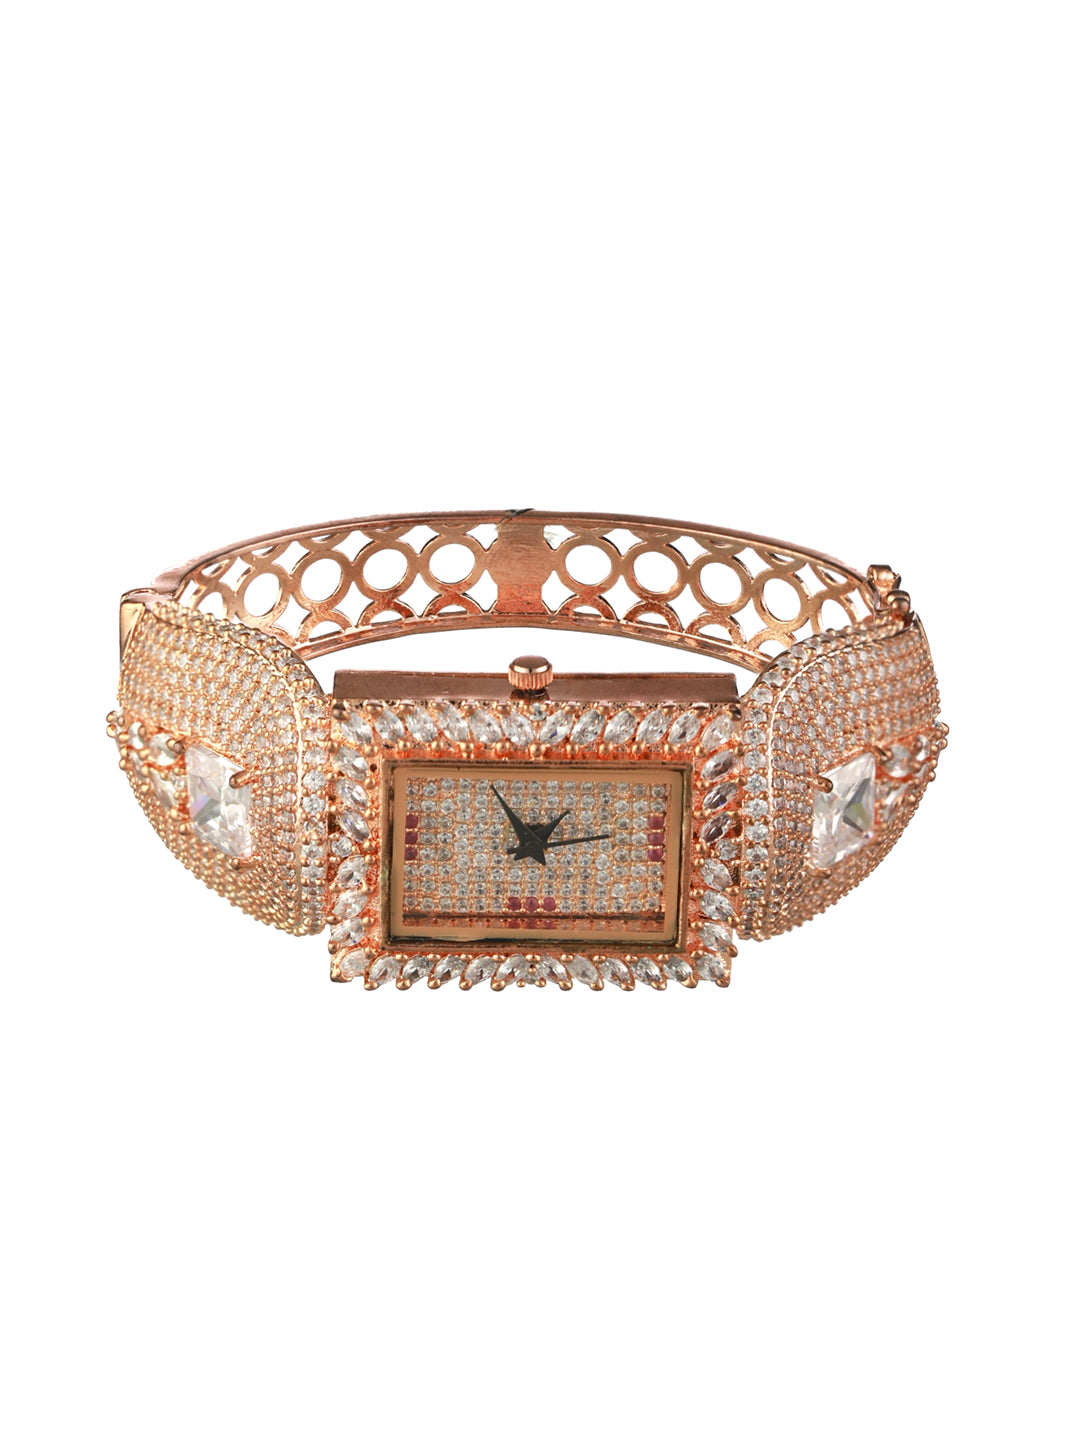 American Diamond Rose Gold-Plated Bracelet Watch